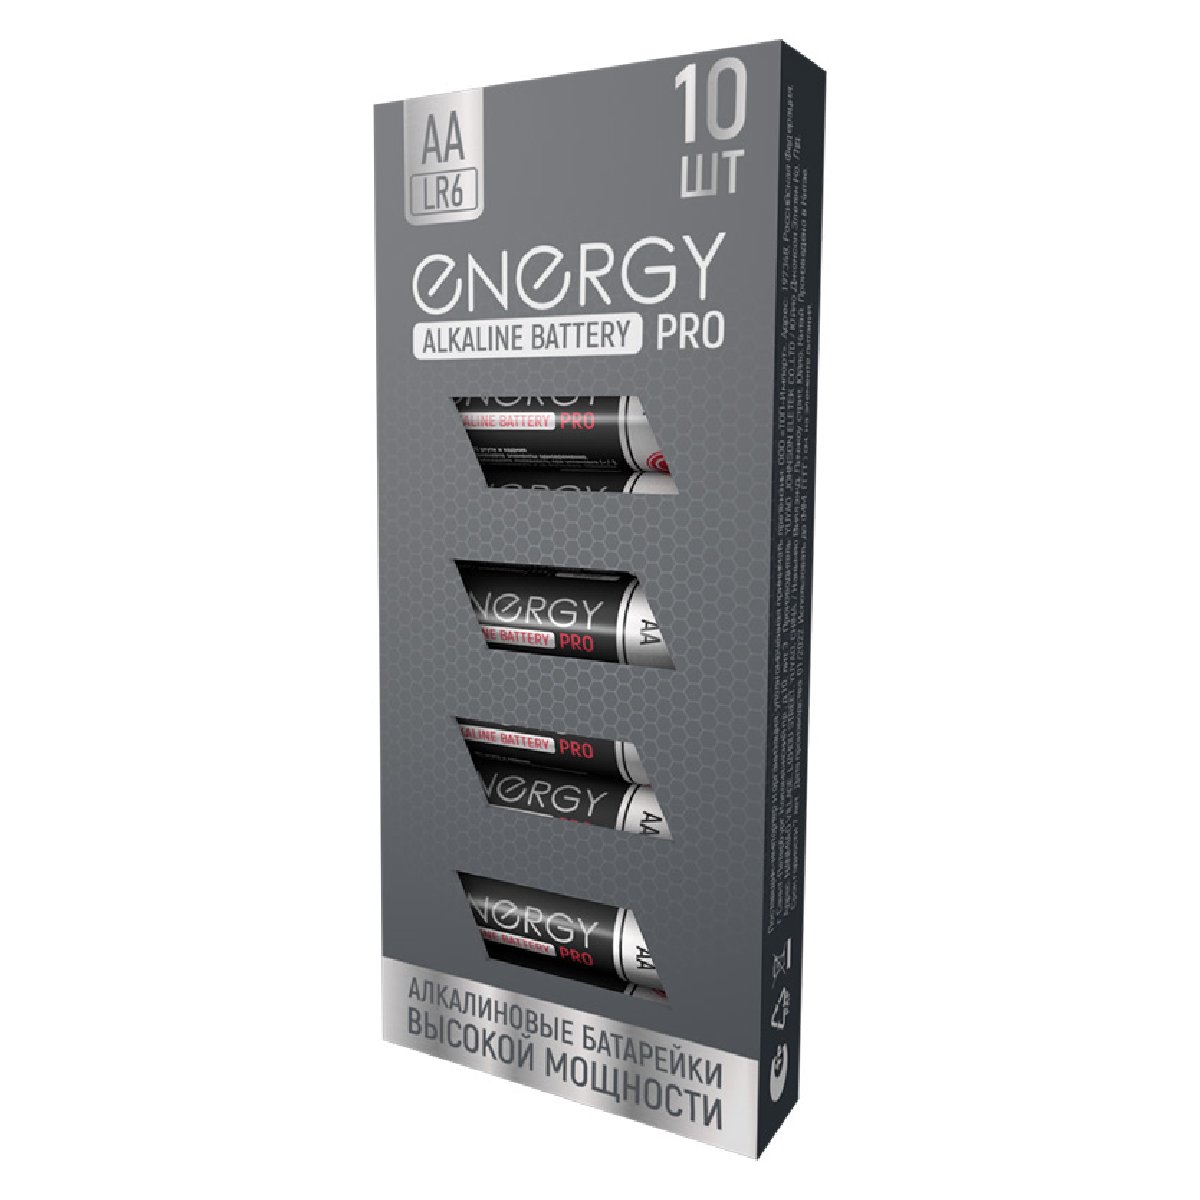   Energy Pro LR6 10 () (104976)